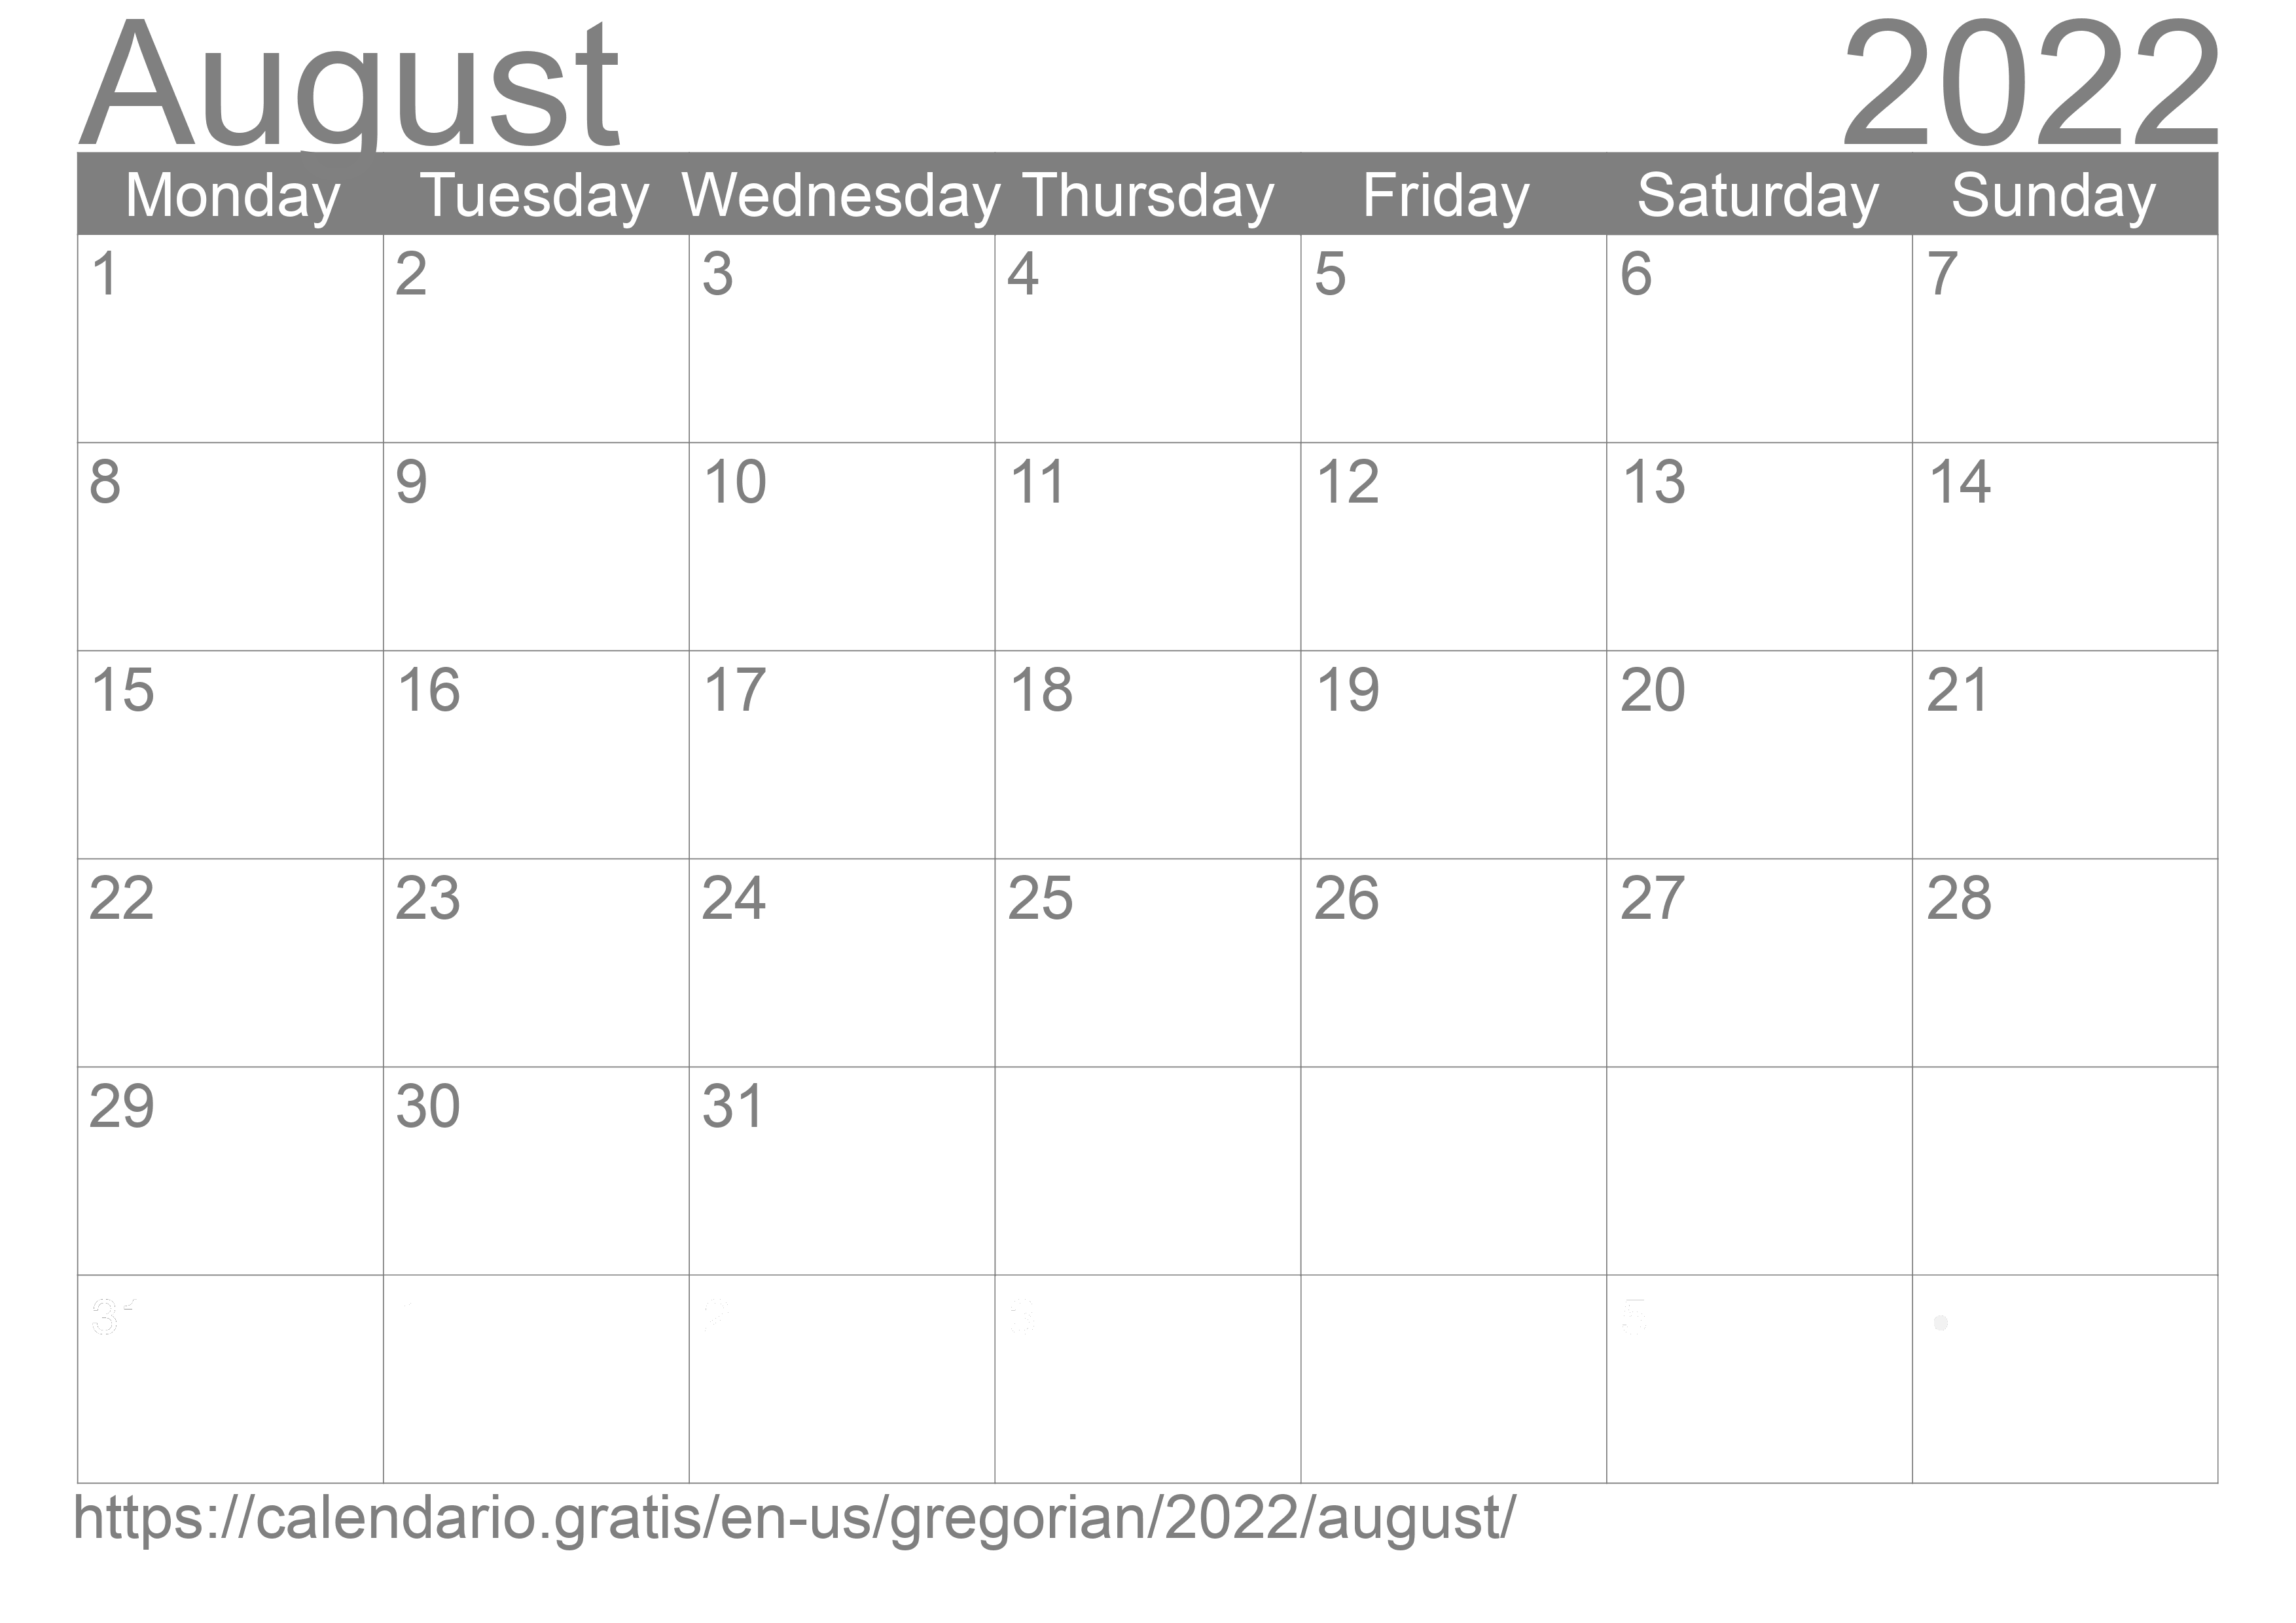 Calendar August 2022 to print